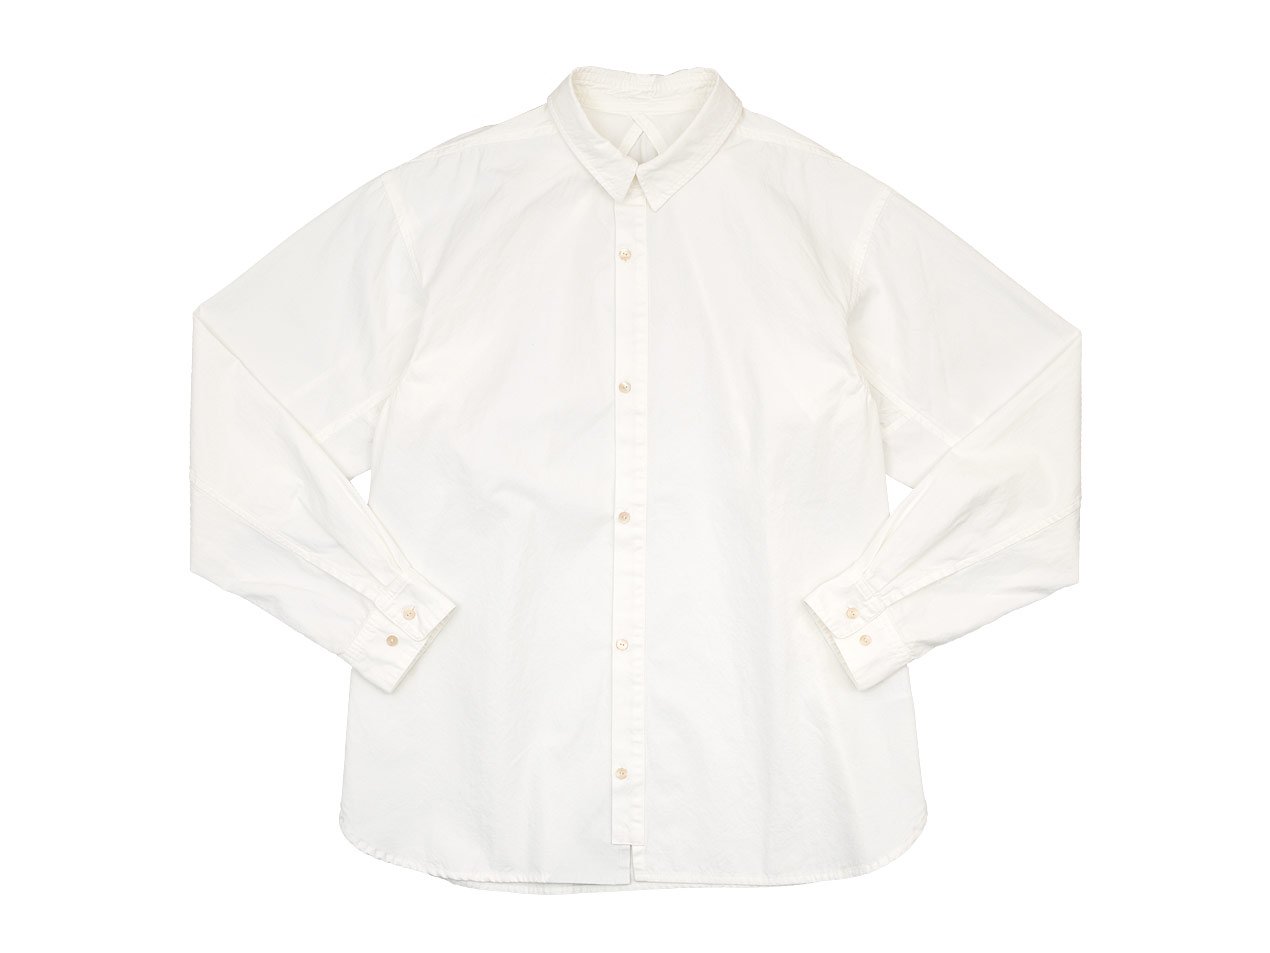 POSTALCO Free Arm Shirt 01 OFF WHITE